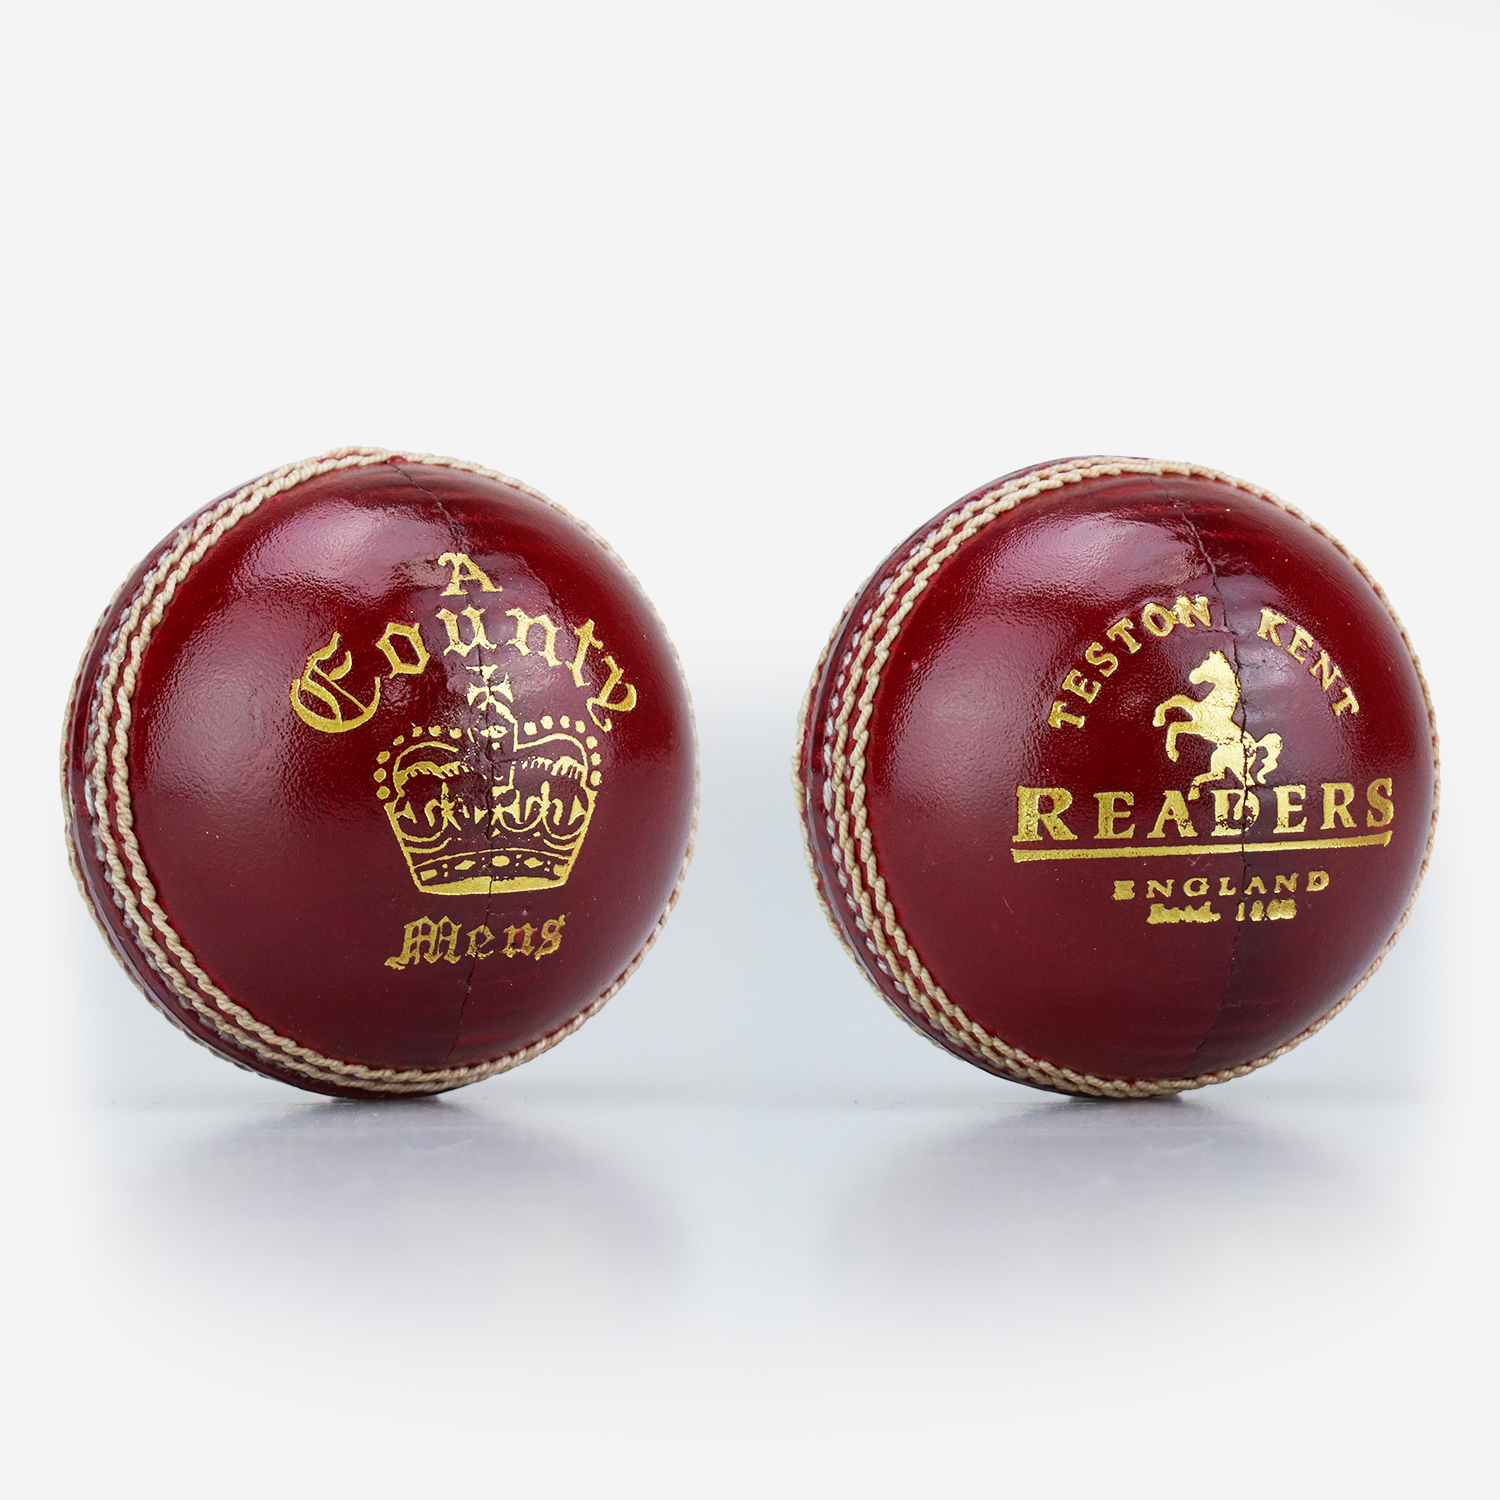 6 x BHLtd hard white Cricket Balls 5.5oz T20 Club county Adult Senior Match 